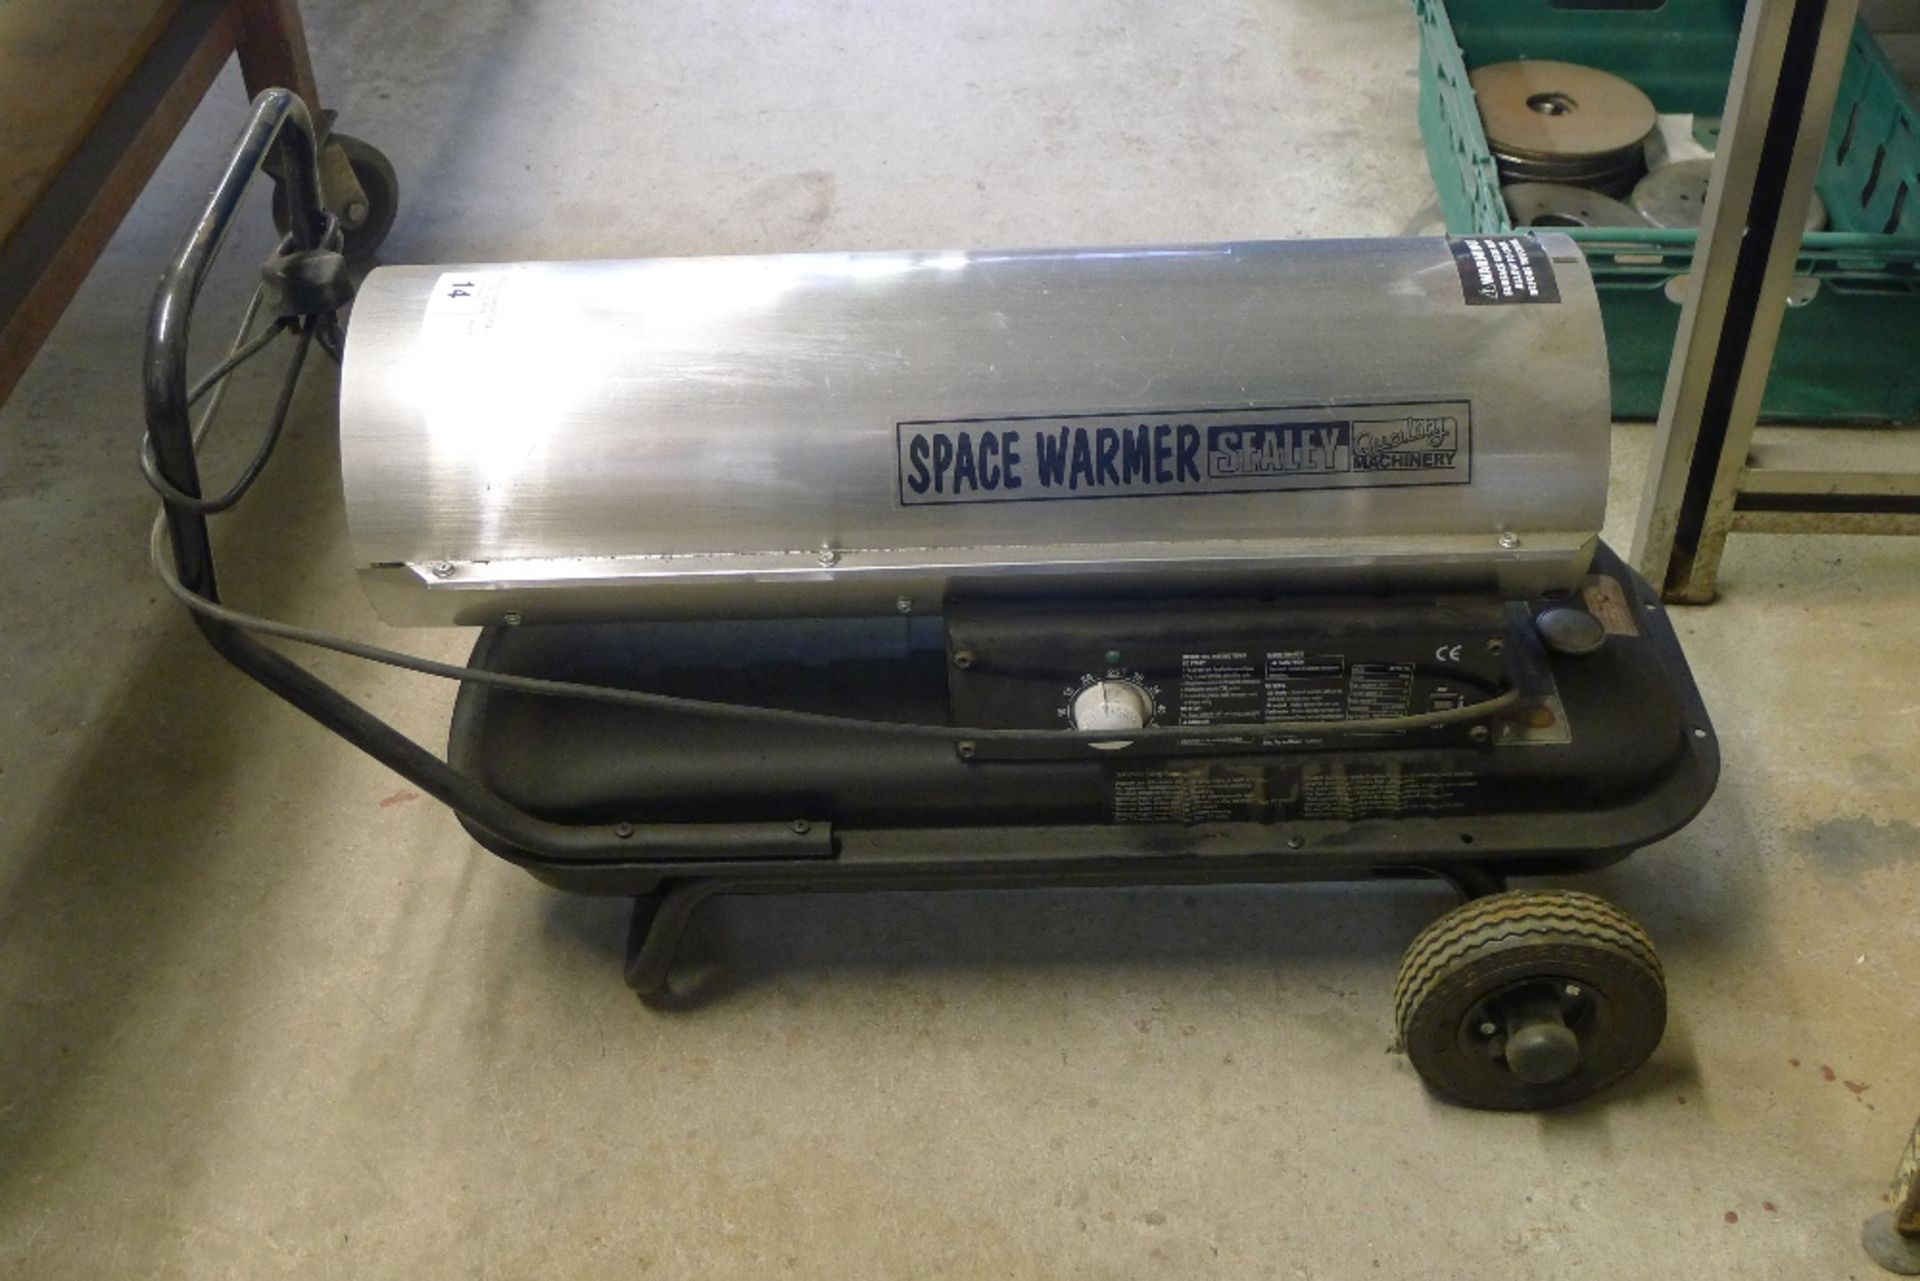 1 space heater by Sealey type AB7081SS, 240v, paraffin / kerosene / diesel